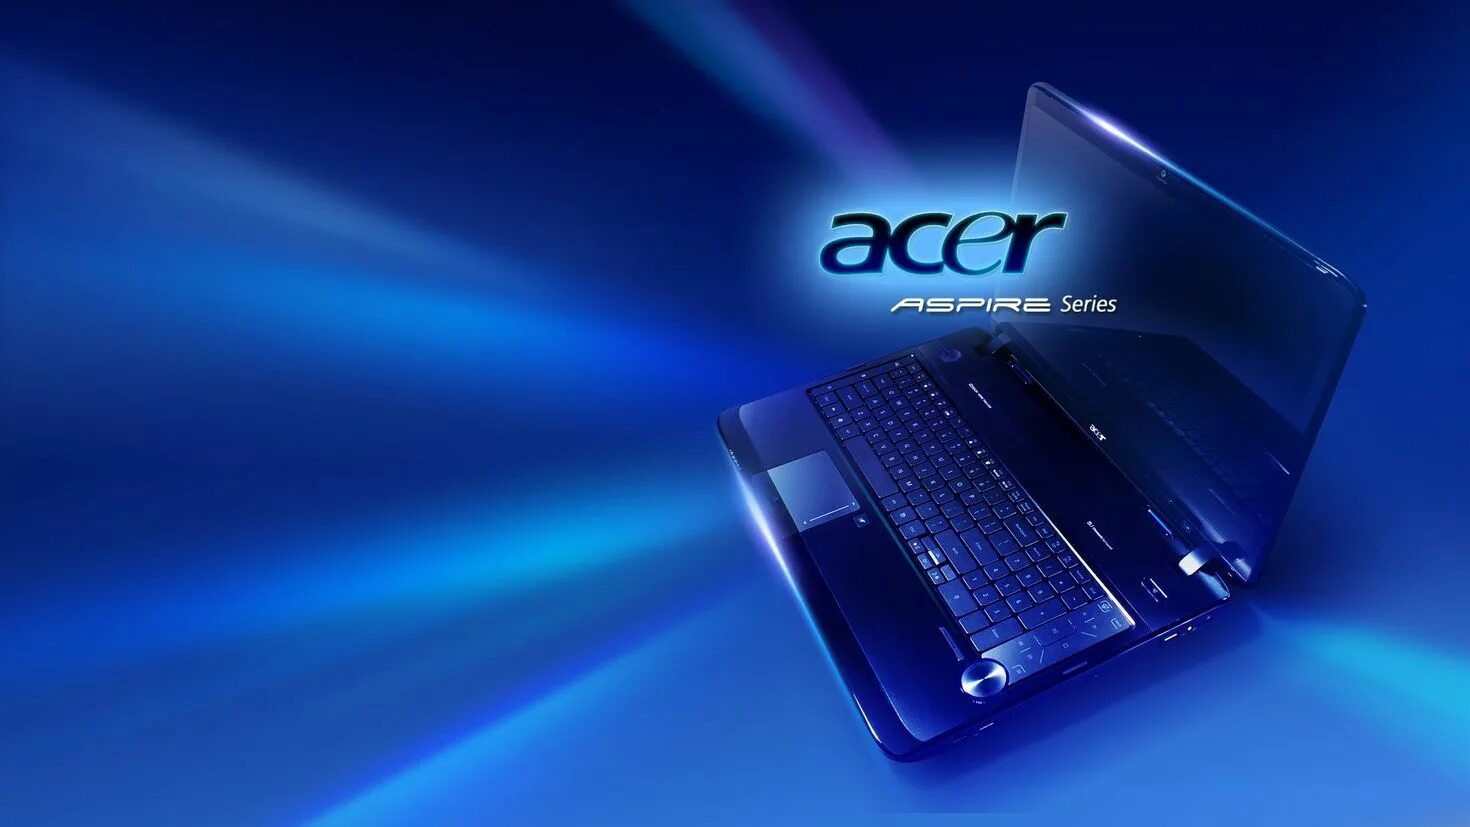 Rasmlar kompyuter. Обои Acer Aspire 5750g. Acer Aspire компьютер 2013. Acer Aspire hd1080. Обои Acer Aspire one d270.